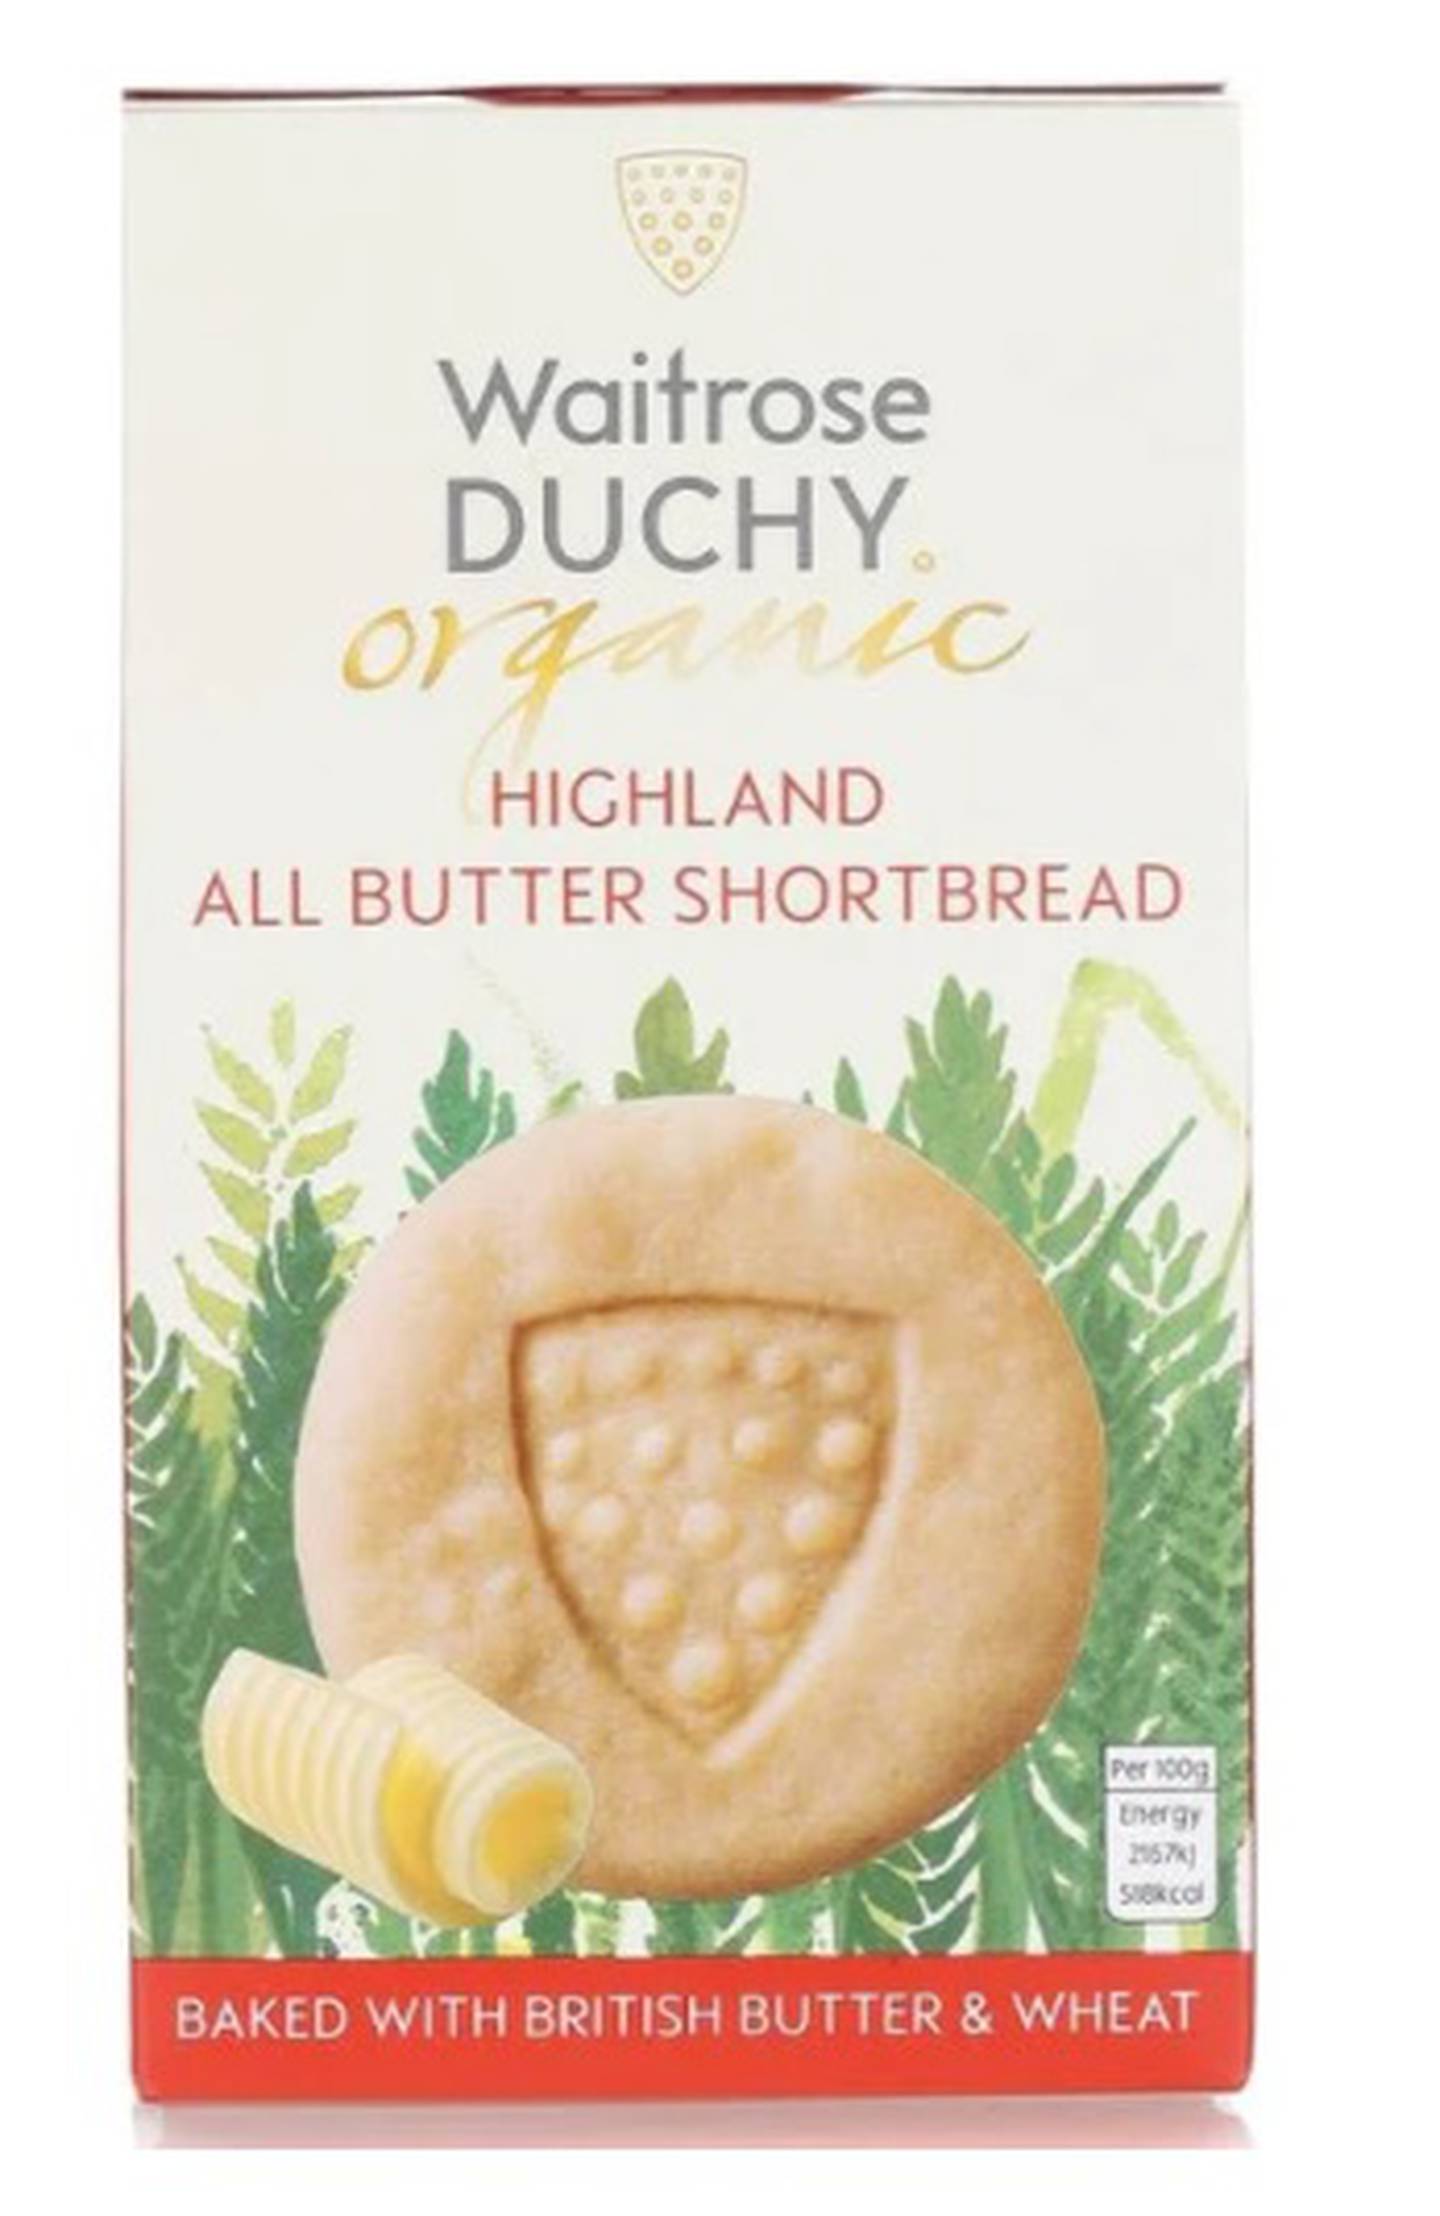 Waitrose Duchy Organic Highland All Butter Shortbread. Photo: Waitrose